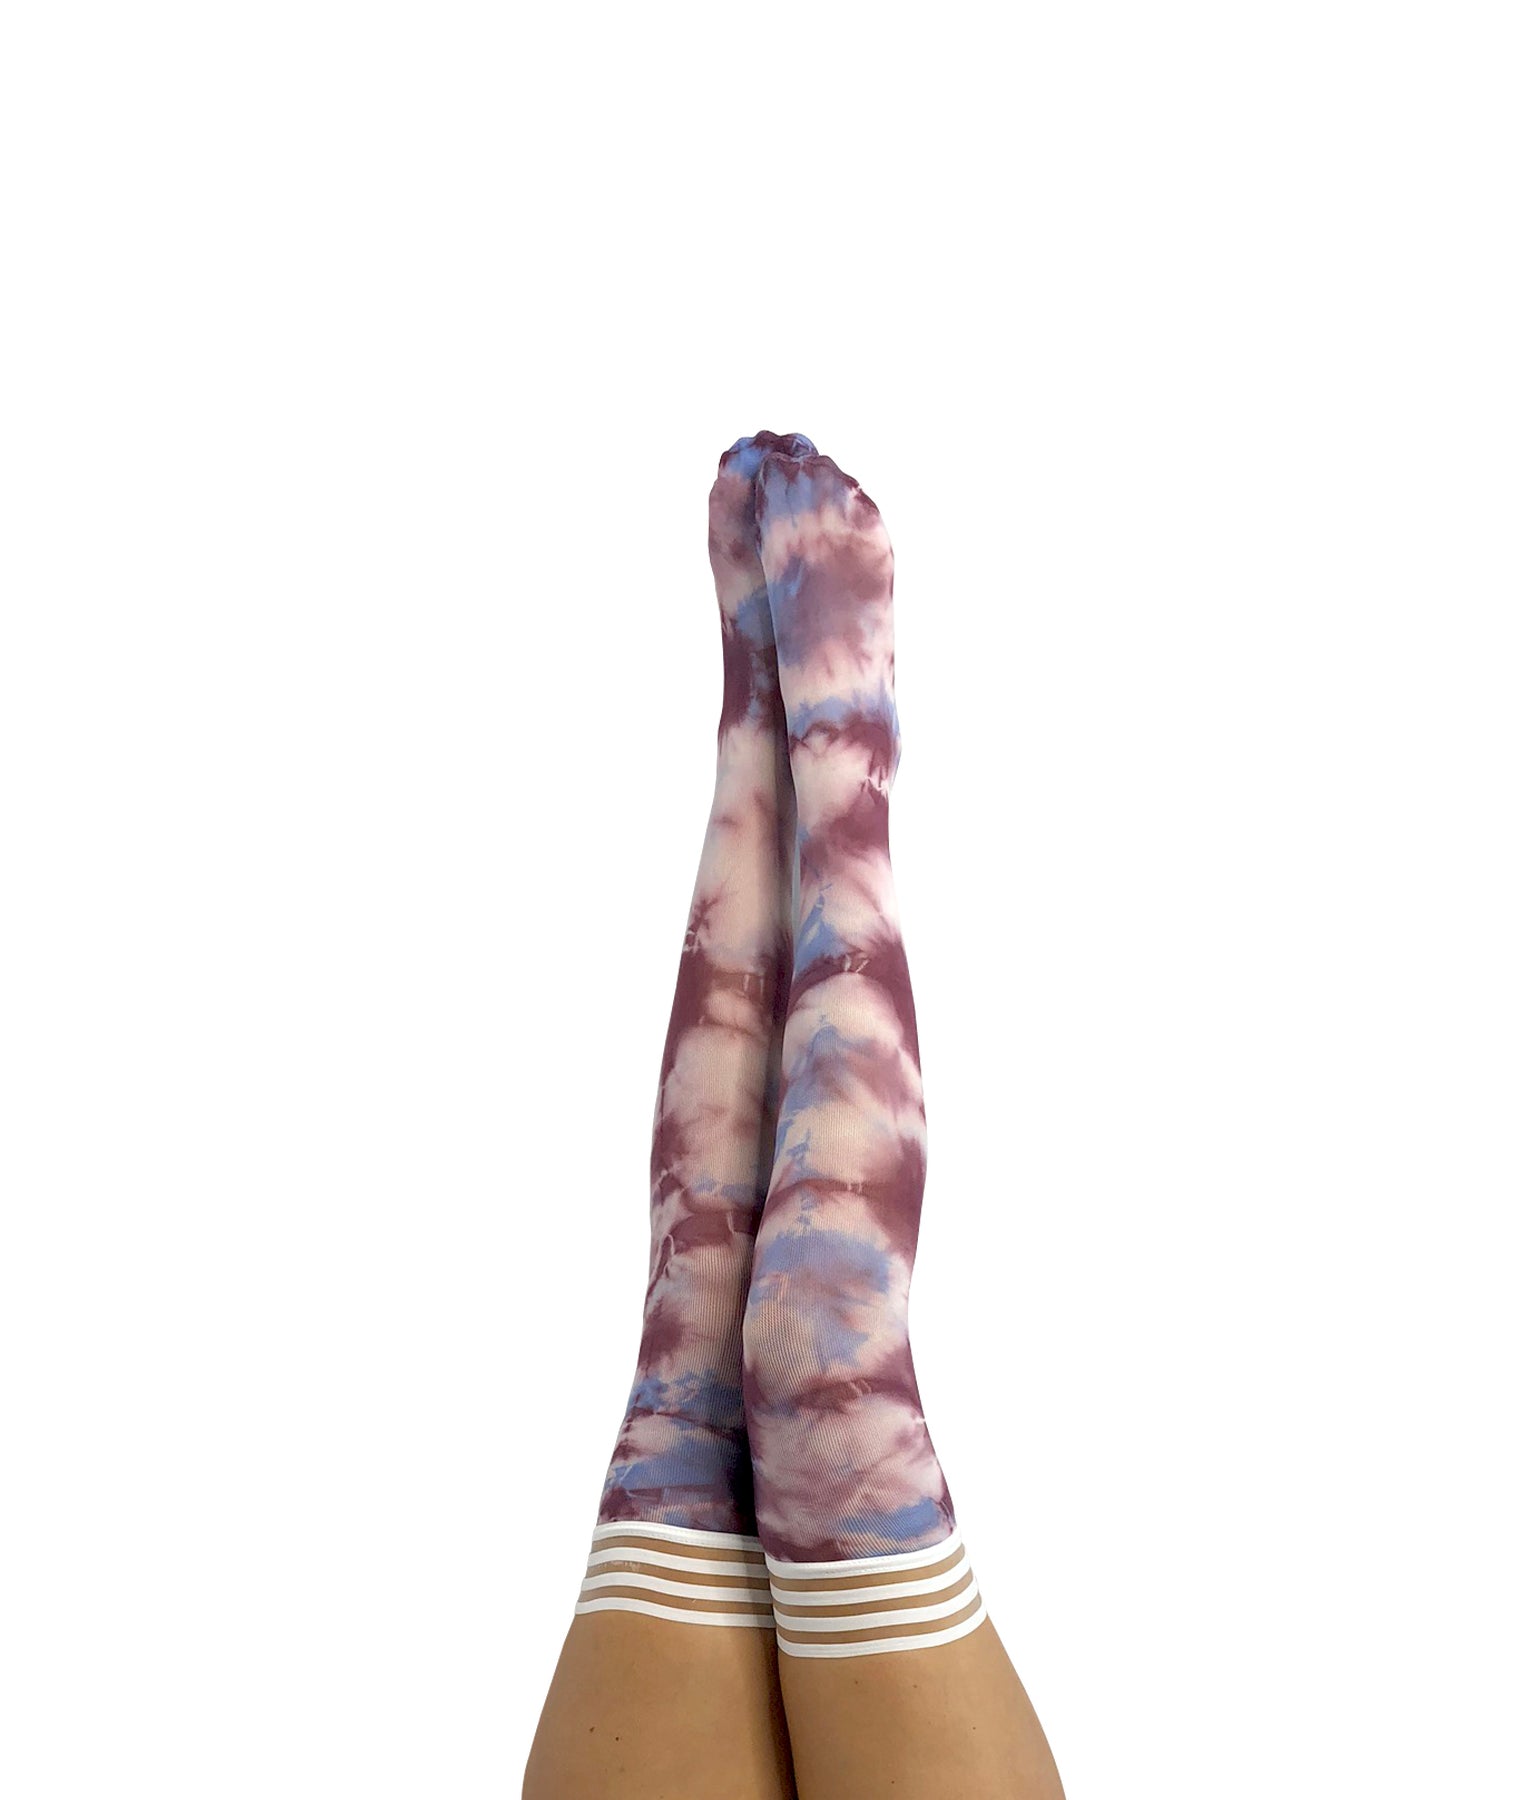 Thigh High Tie Dye Stocking Socks from Kix'ies